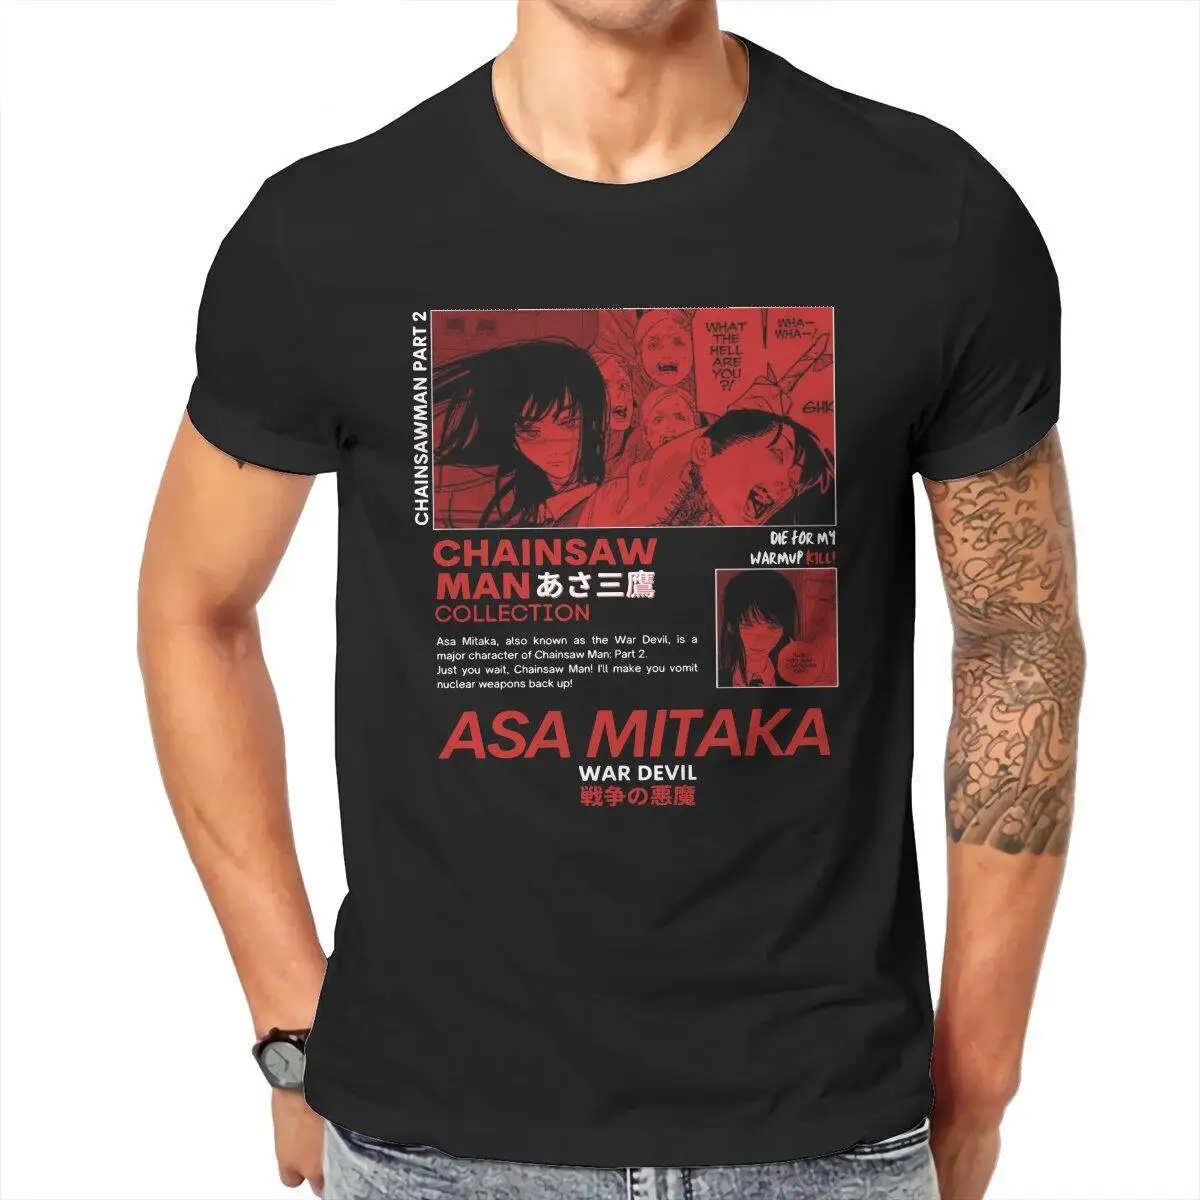 Asa Mitaka War Devil Chainsaw Man  T Shirts for Men Cotton Vintage T-Shirts Crewneck  Tees Short Sleeve Tops Graphic